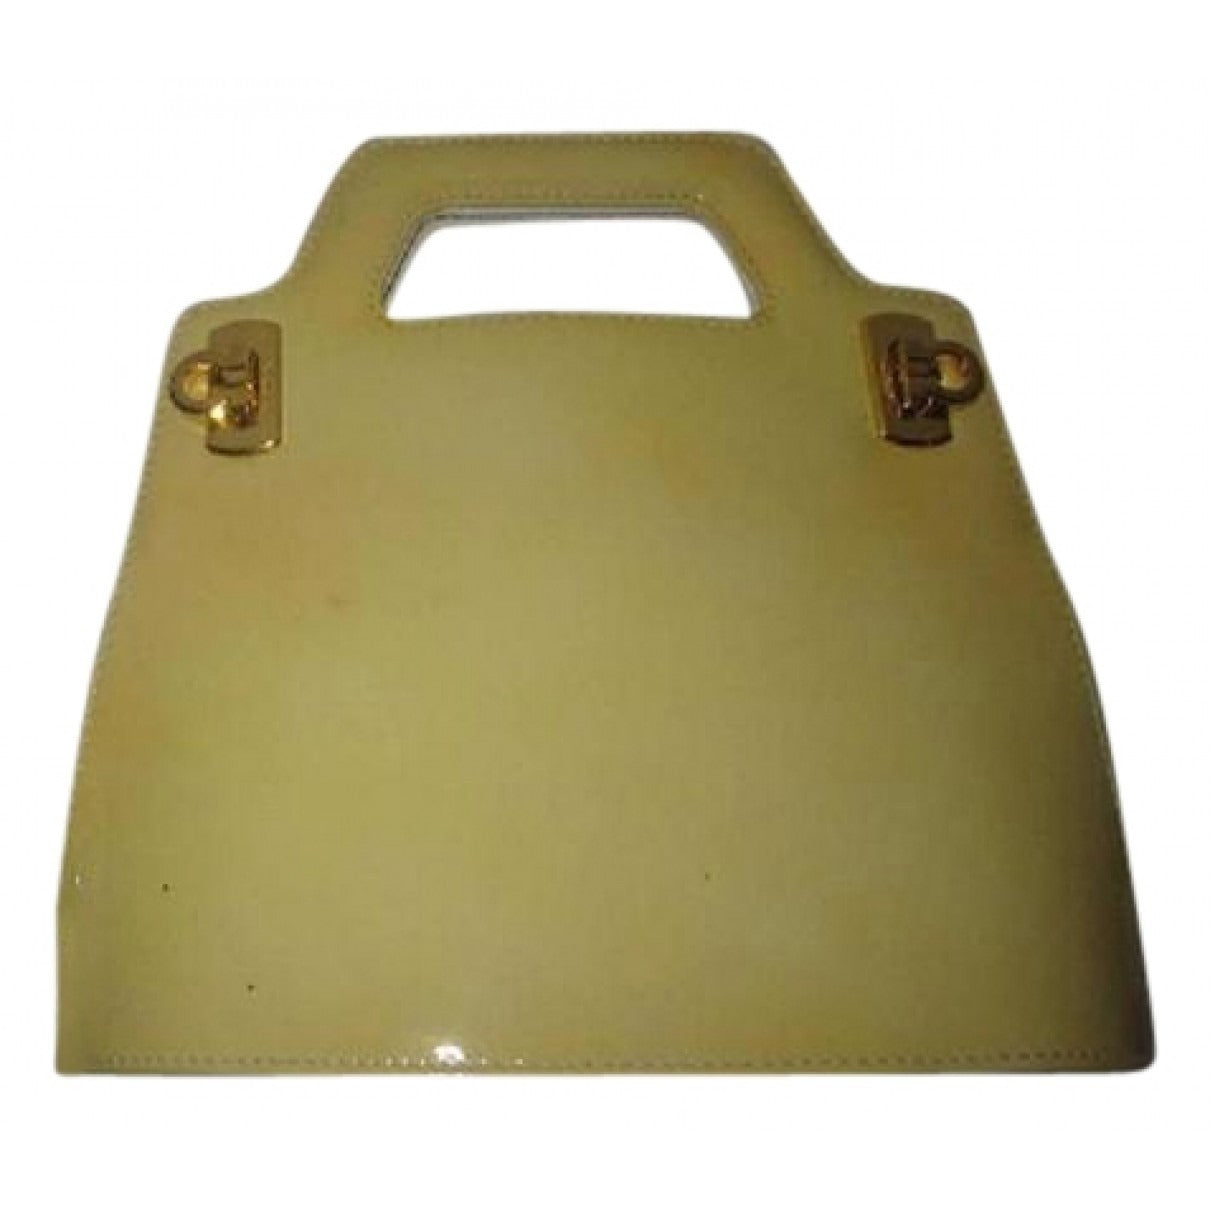 Ferragamo yellow patent leather two-way handbag- RE-RELEASED!